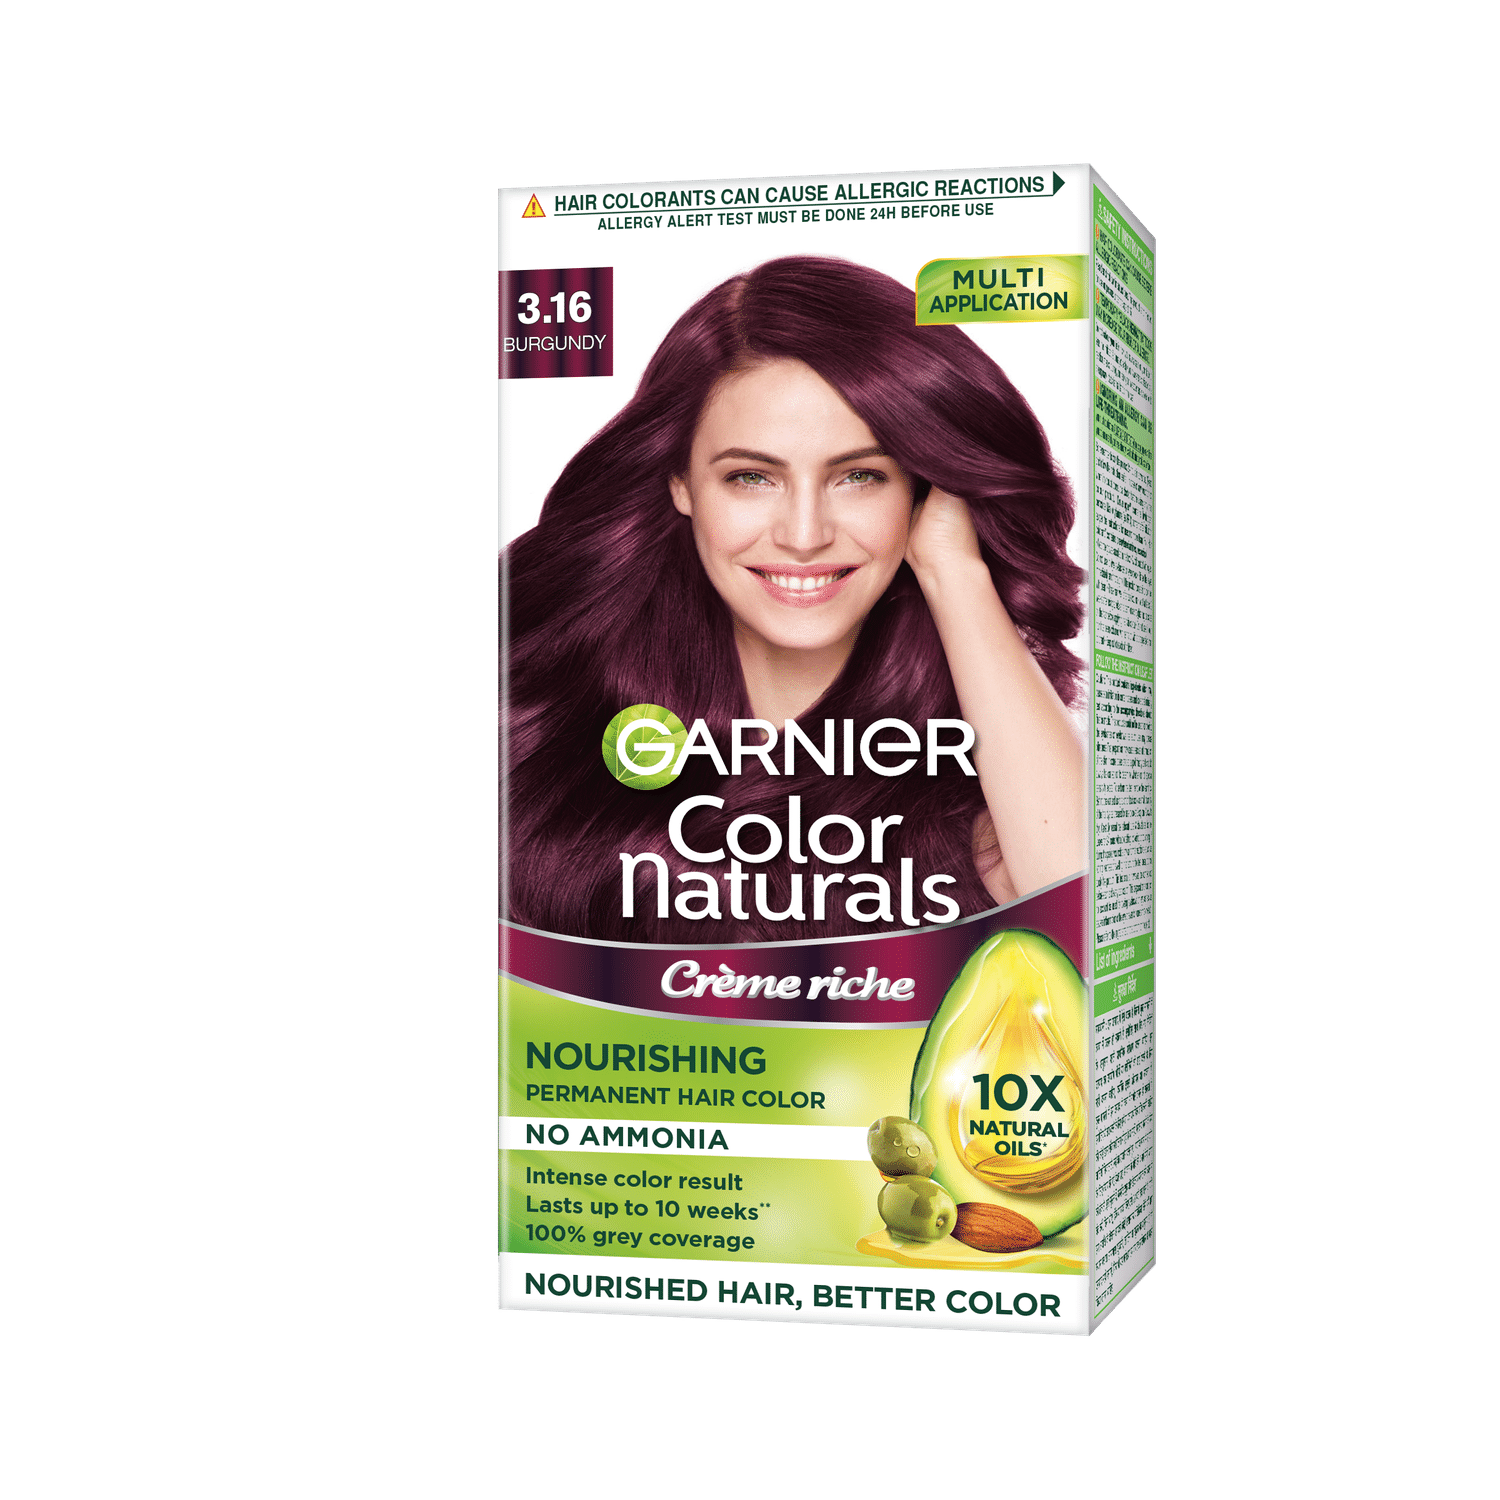 Buy Garnier Color Naturals Creme hair color, Shade 3.16 Burgundy (70 ml + 60 g) - Purplle